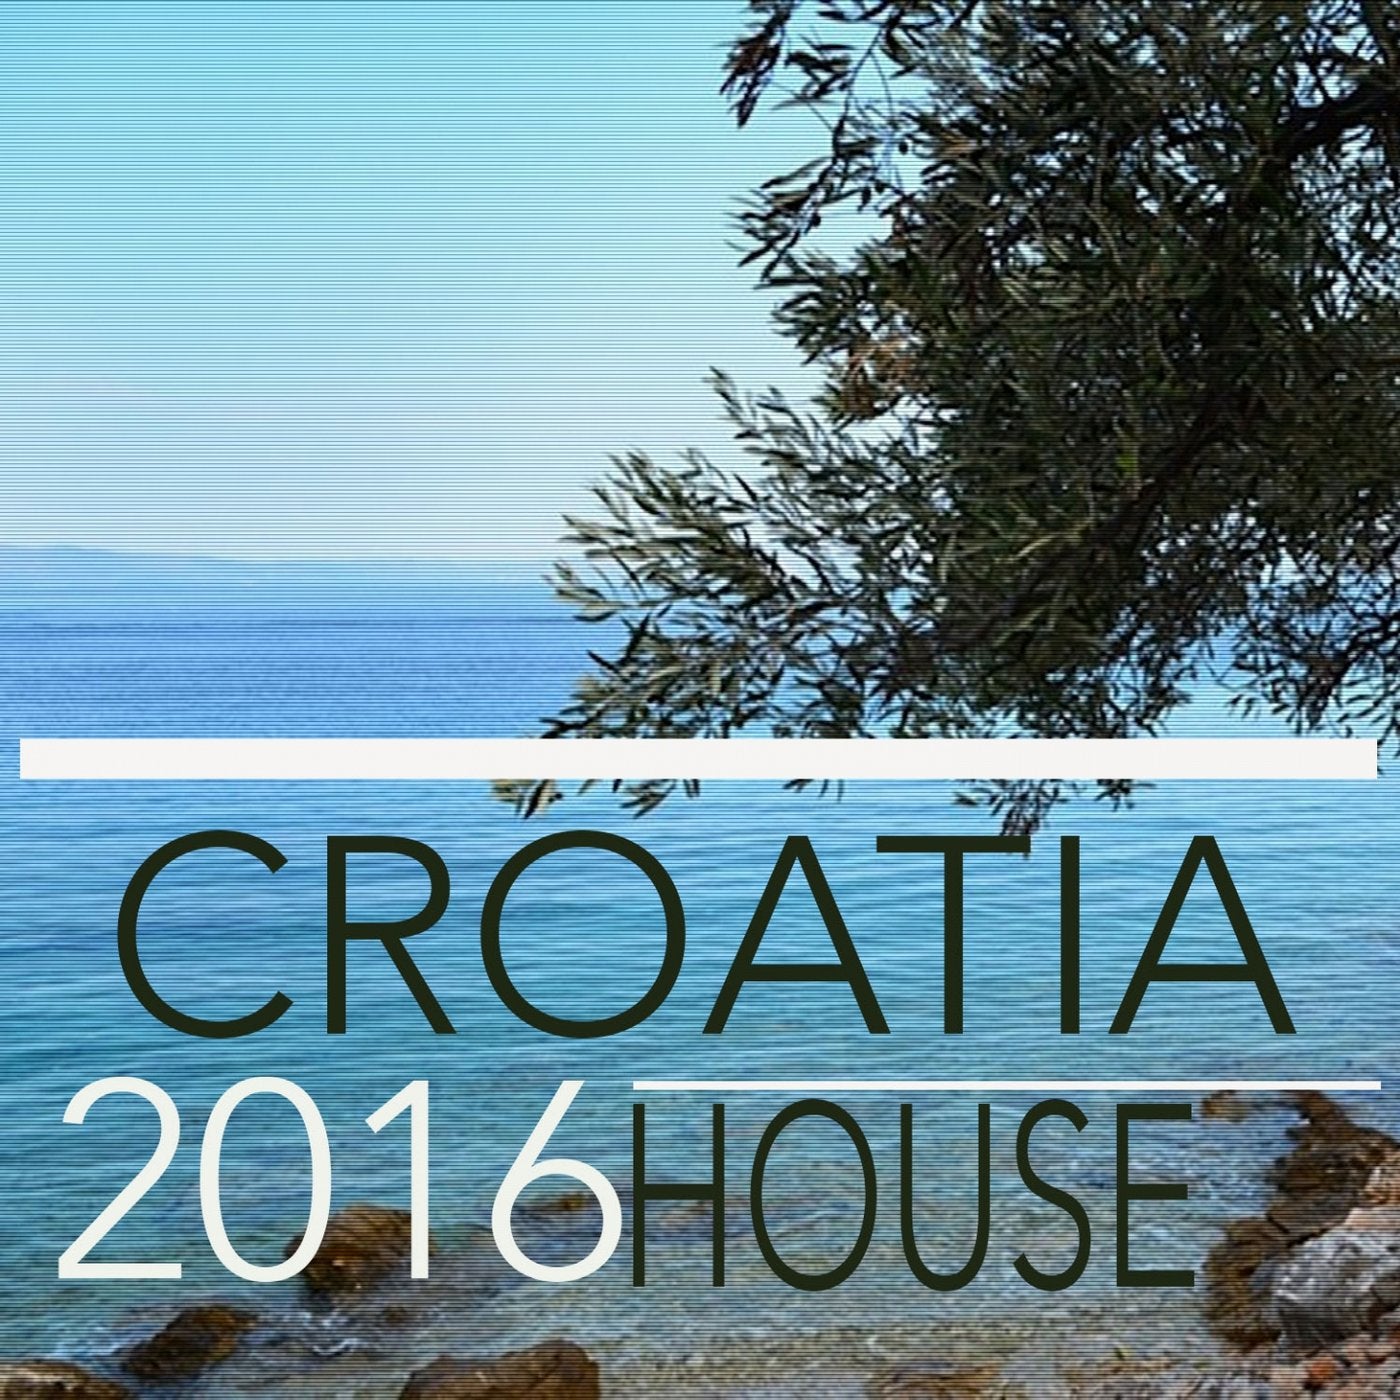 Croatia 2016 House